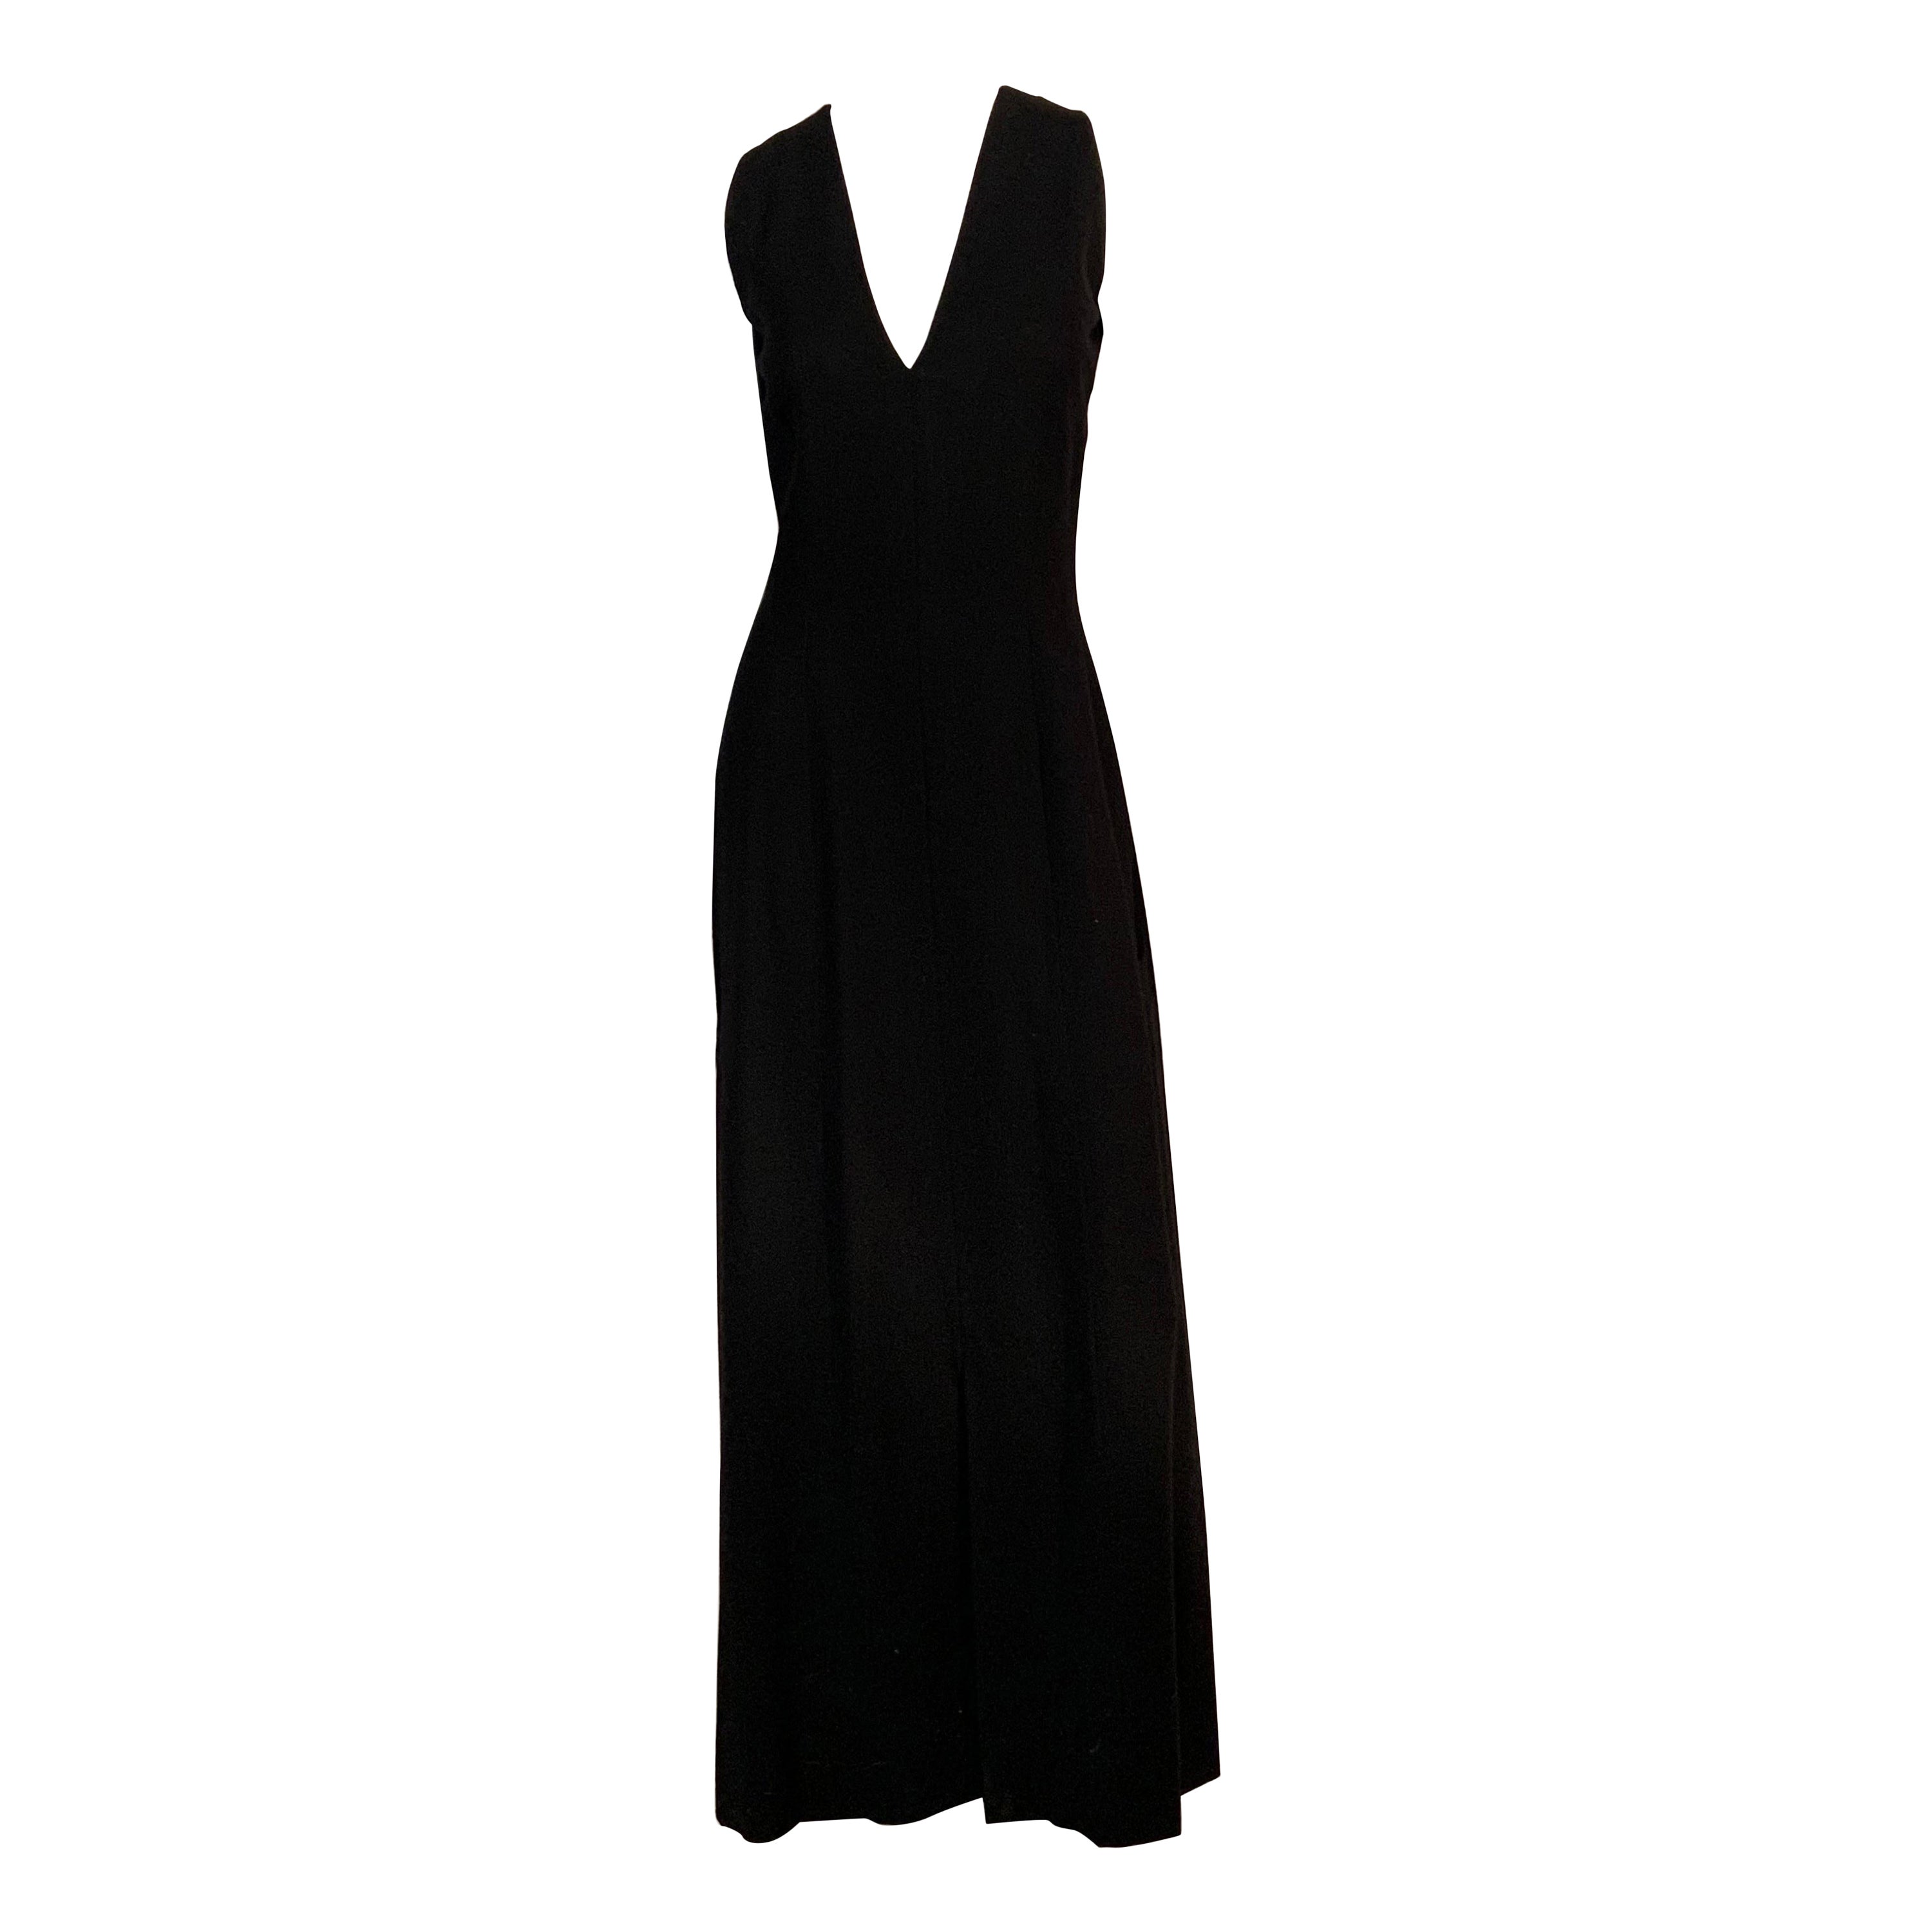 1970's Pauline Trigere Black Wool Crepe Dress with Low Cut Neckline For Sale